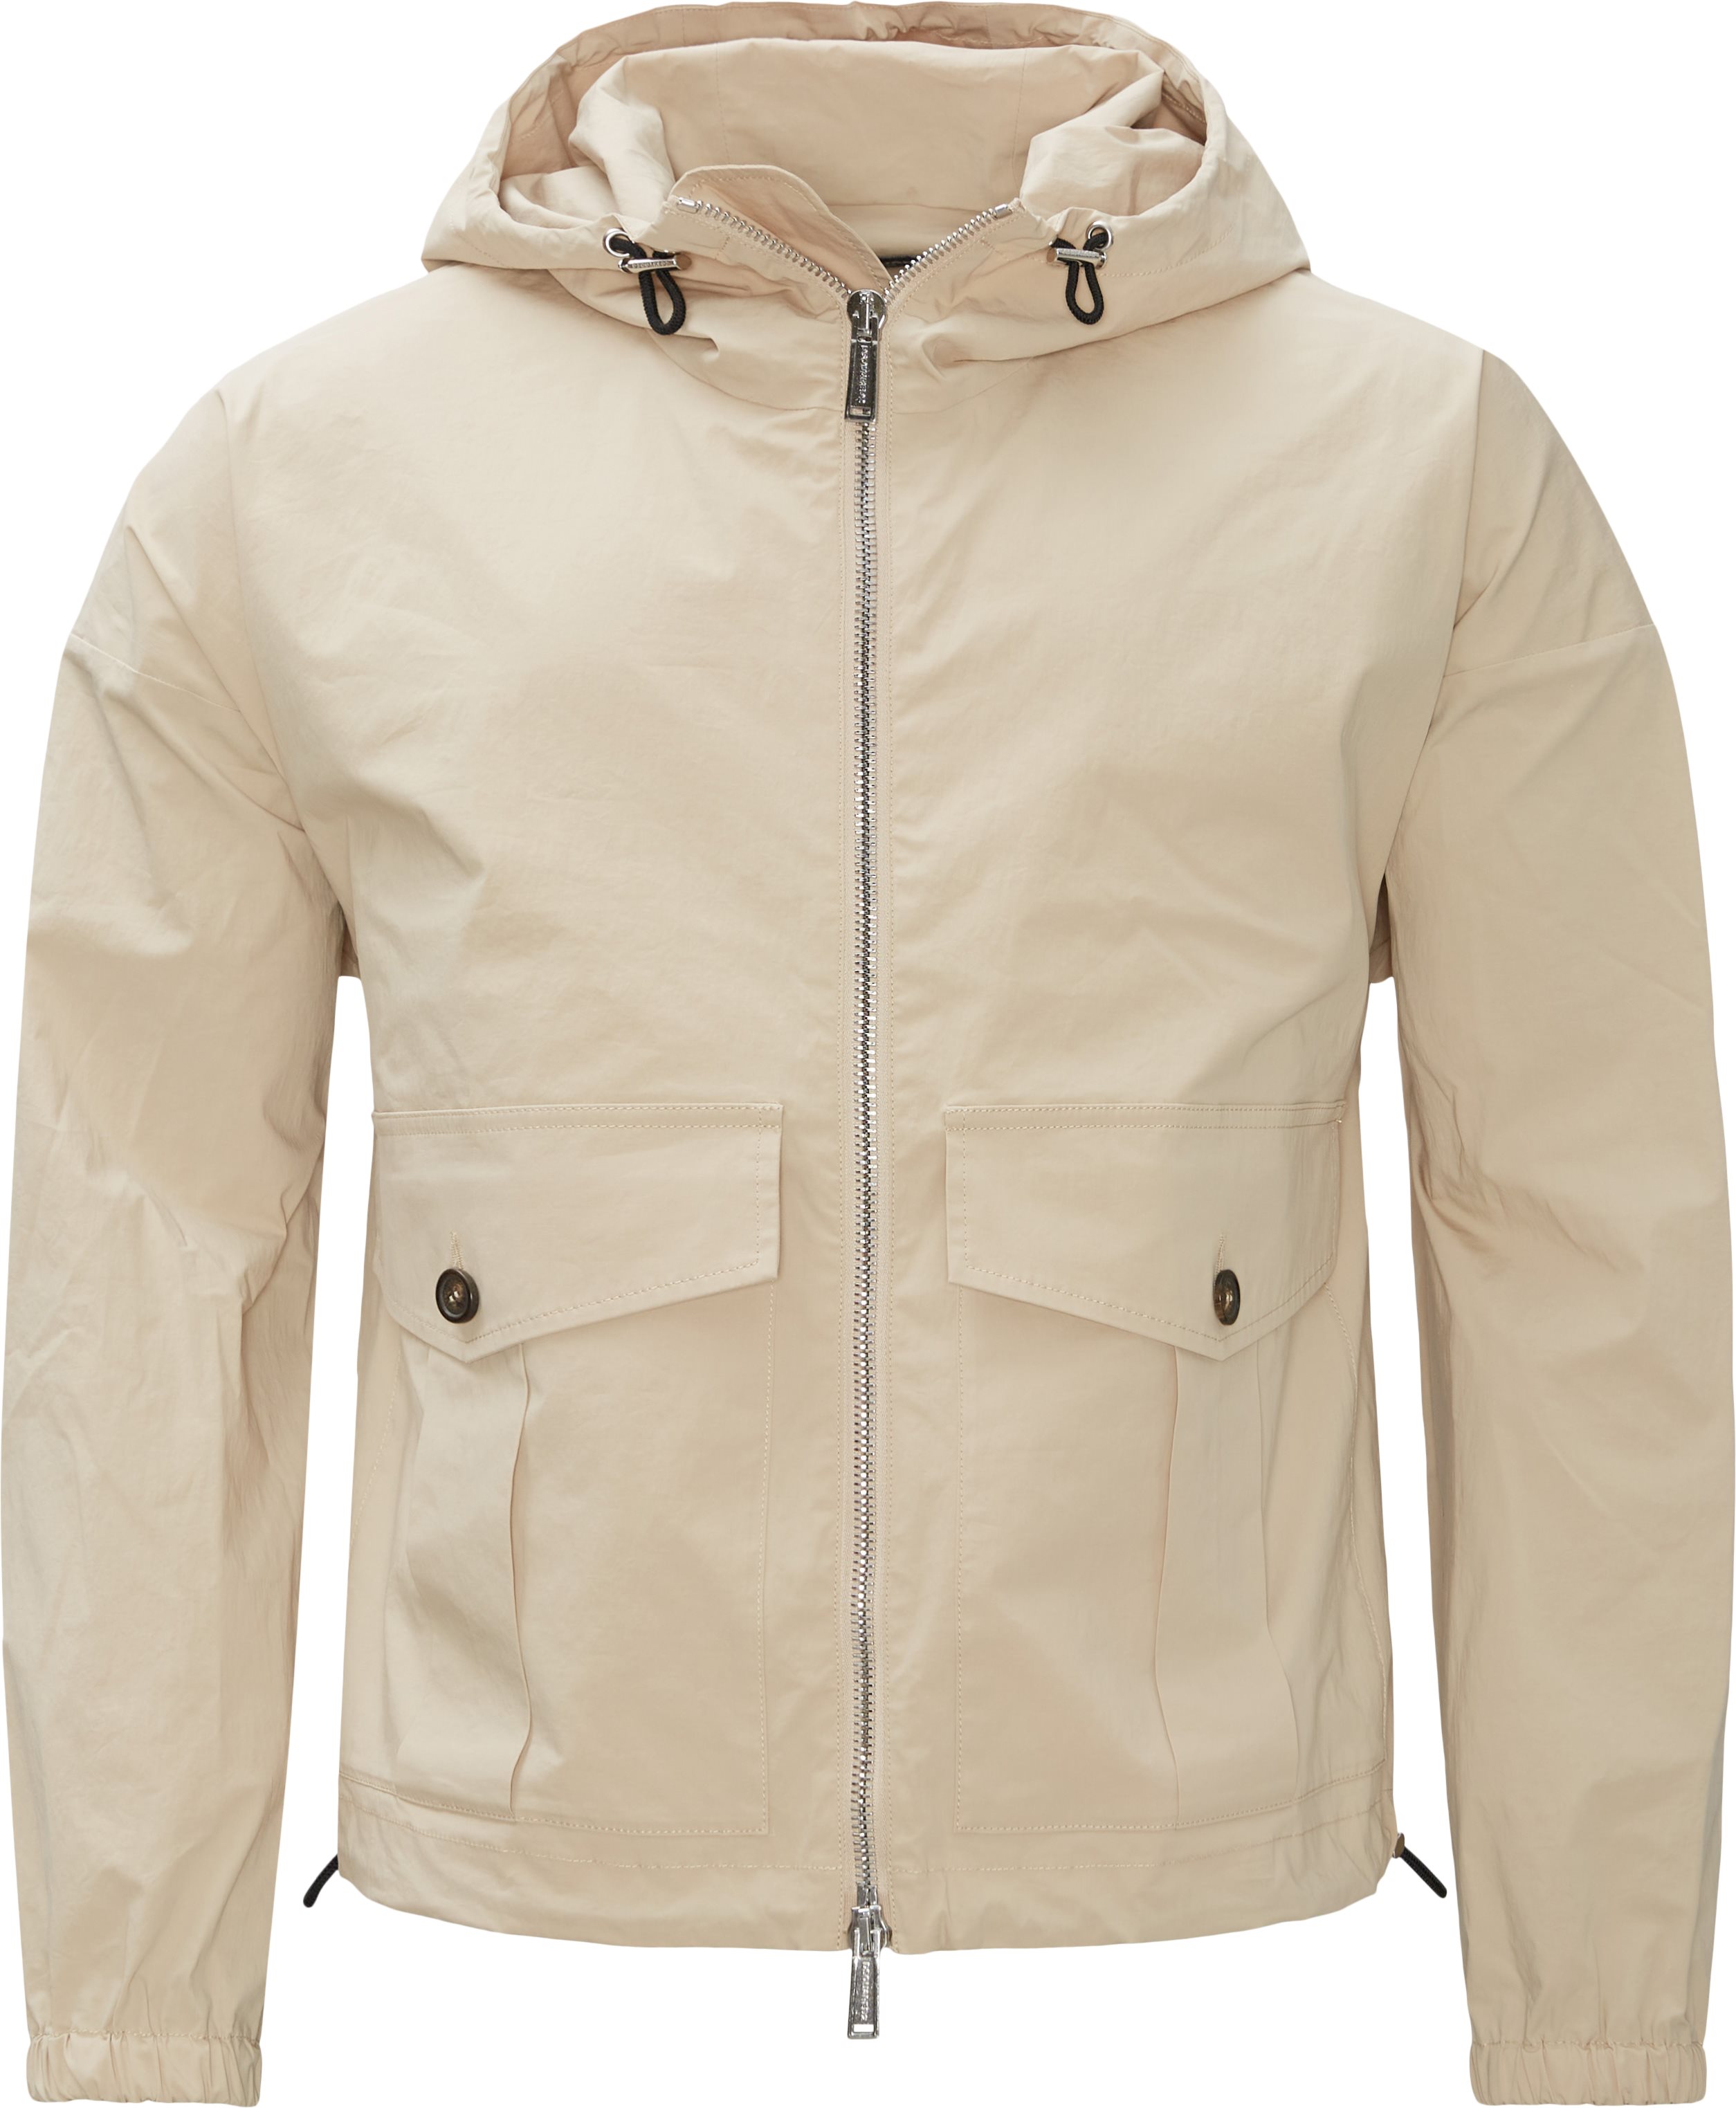 Light Cotton Jacket - Jakker - Regular fit - Sand